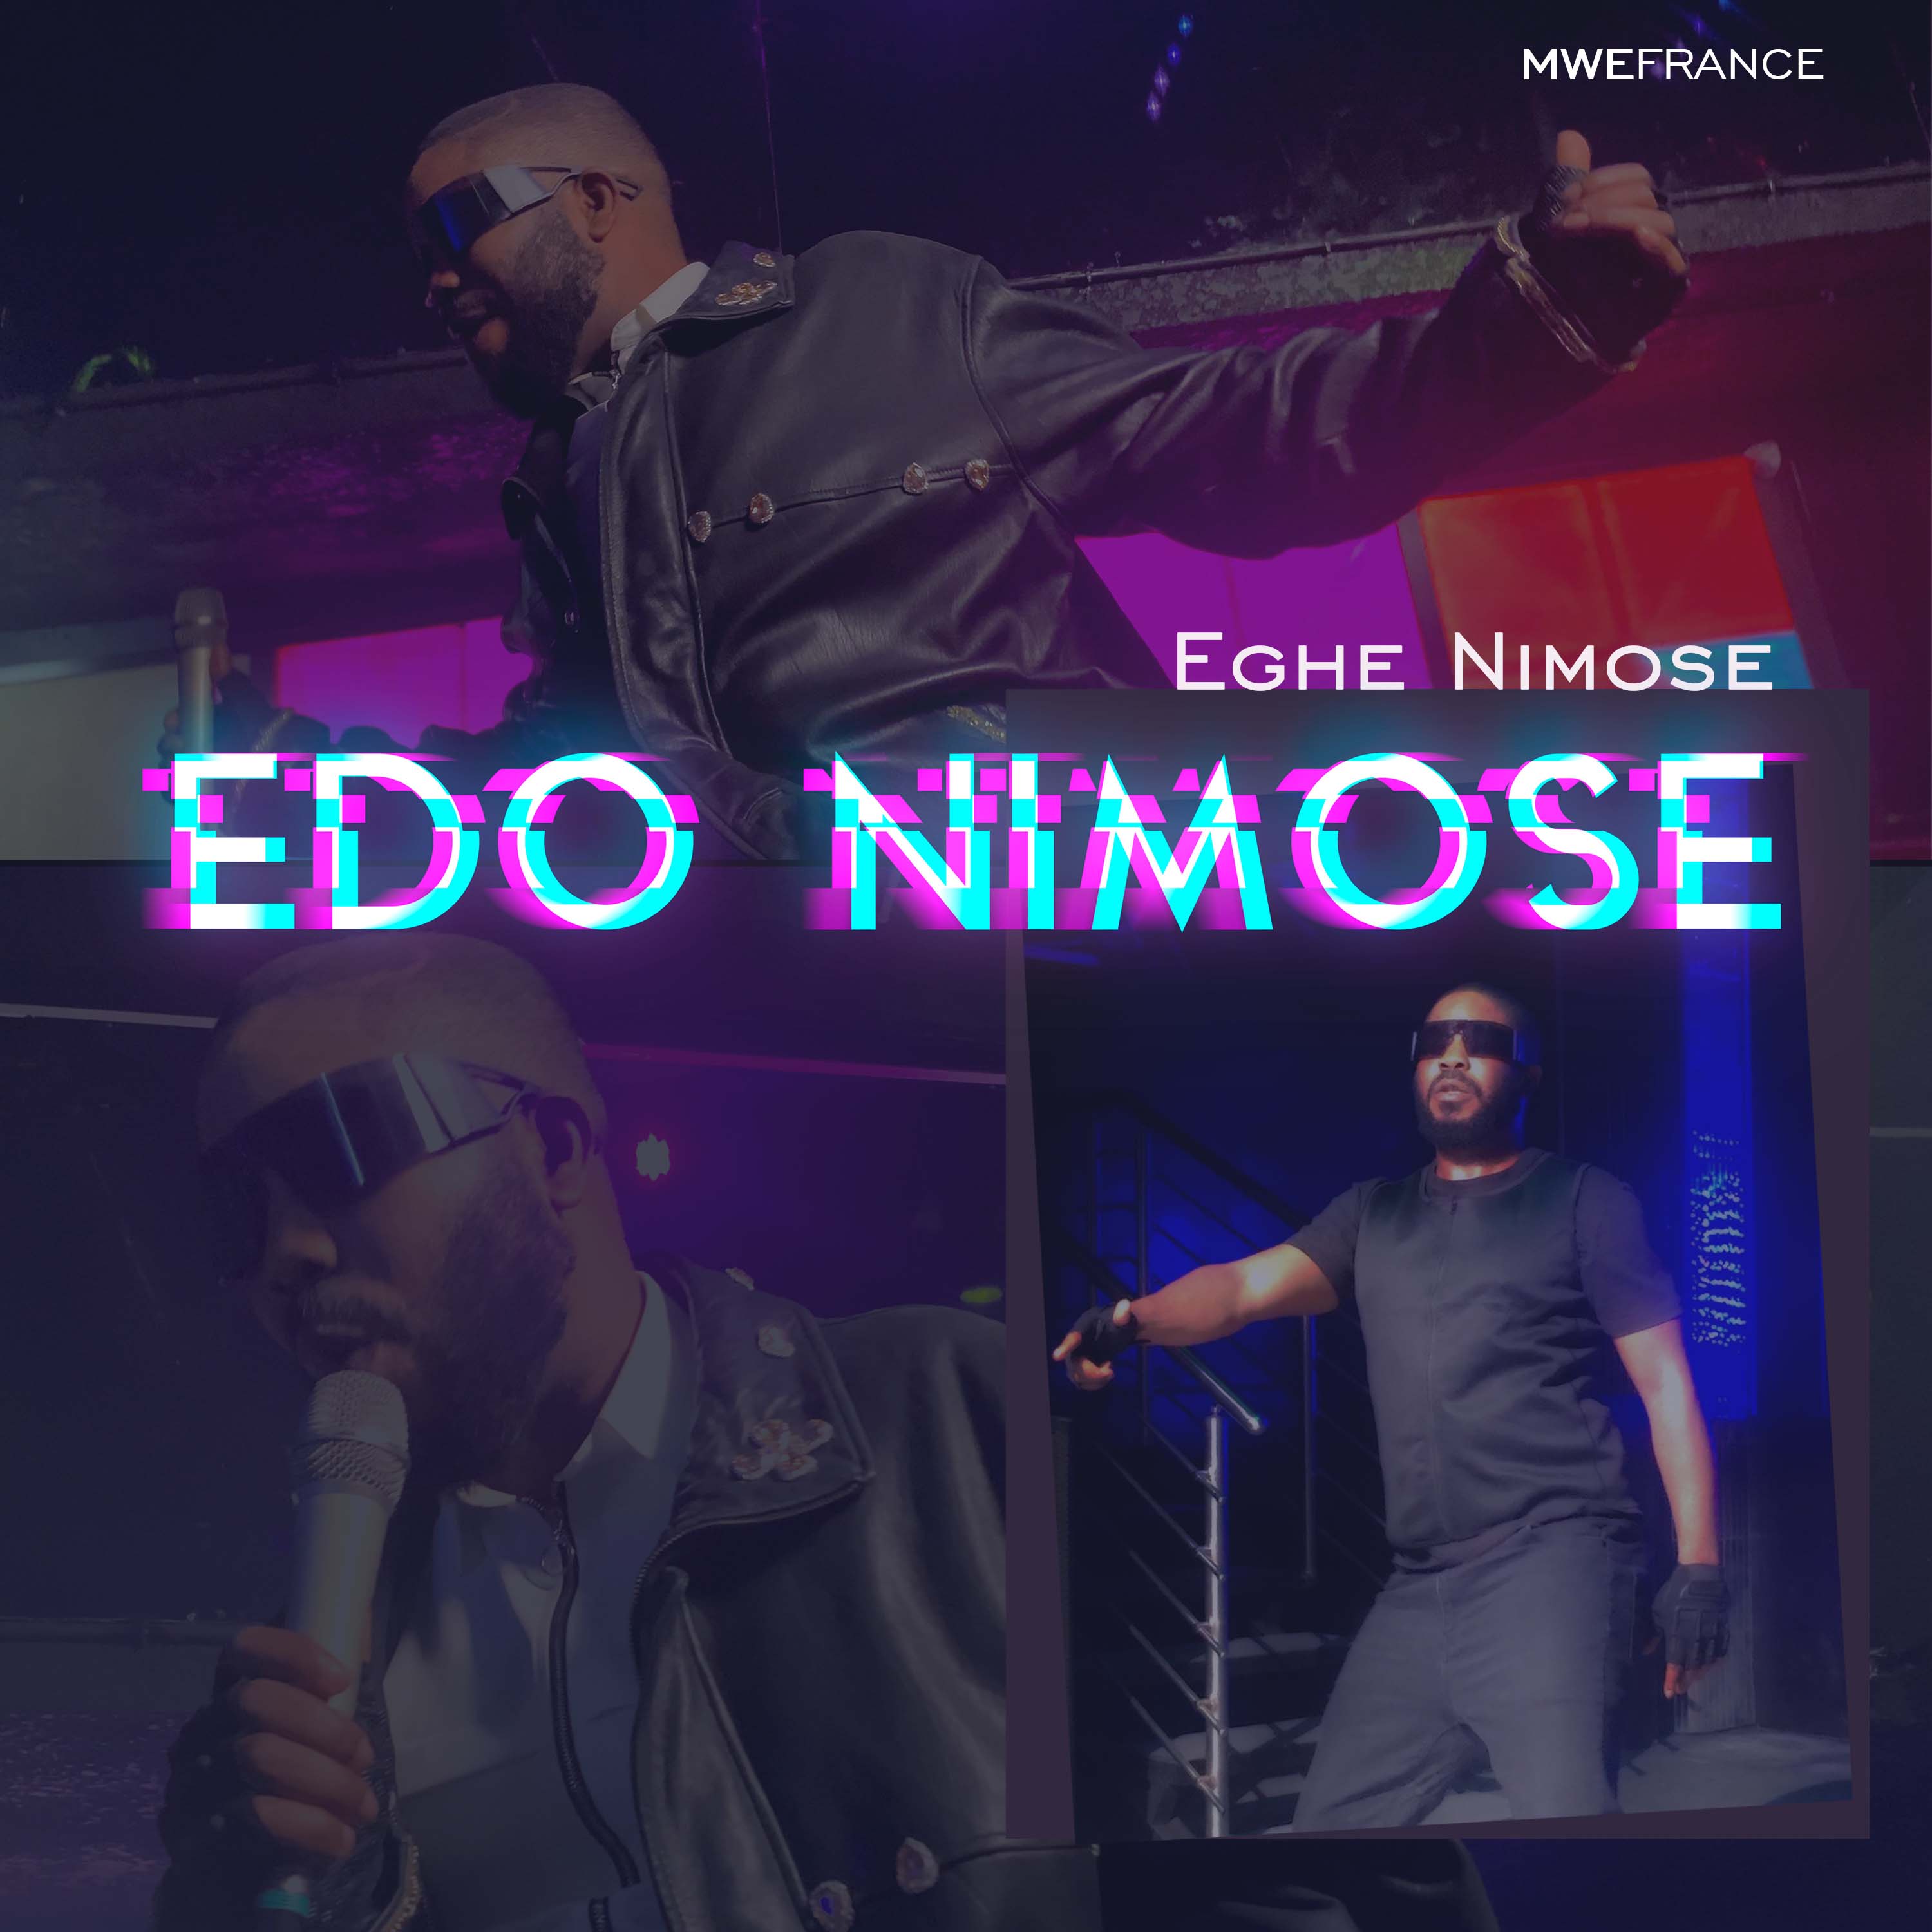 Edo Nimose album by Eghe Nimose, artist musician and producer